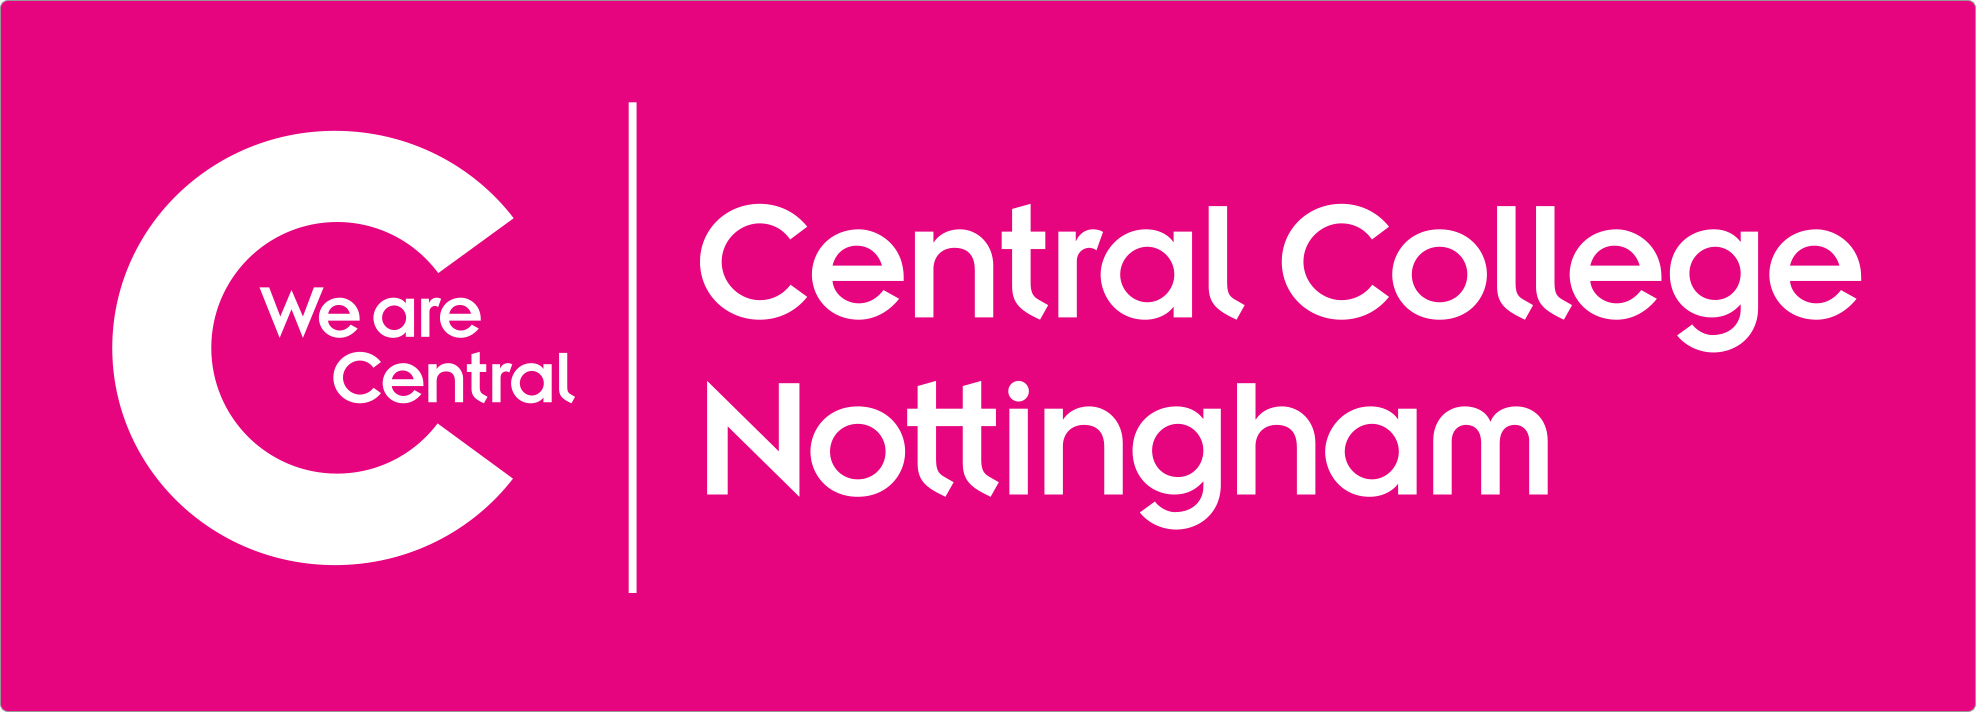 Central College Nottingham 